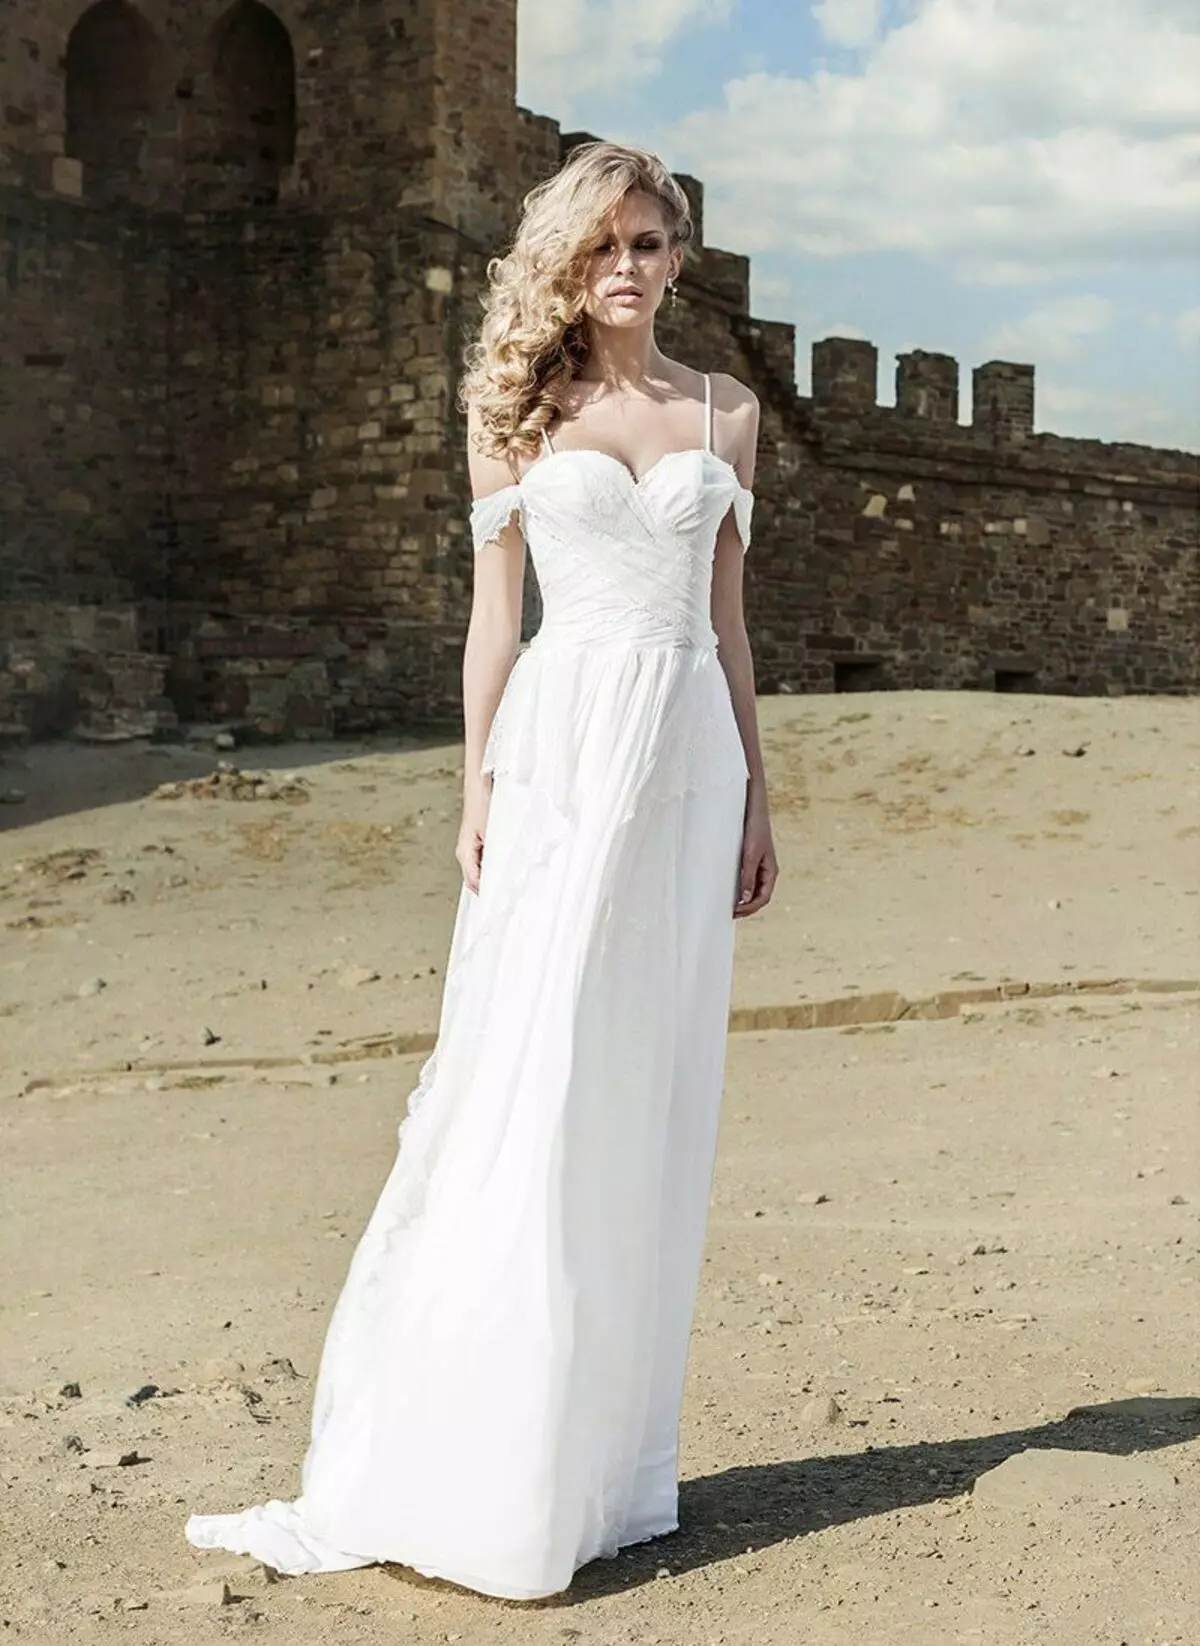 Vestido de noiva de Anne-Mariee da colección 2014